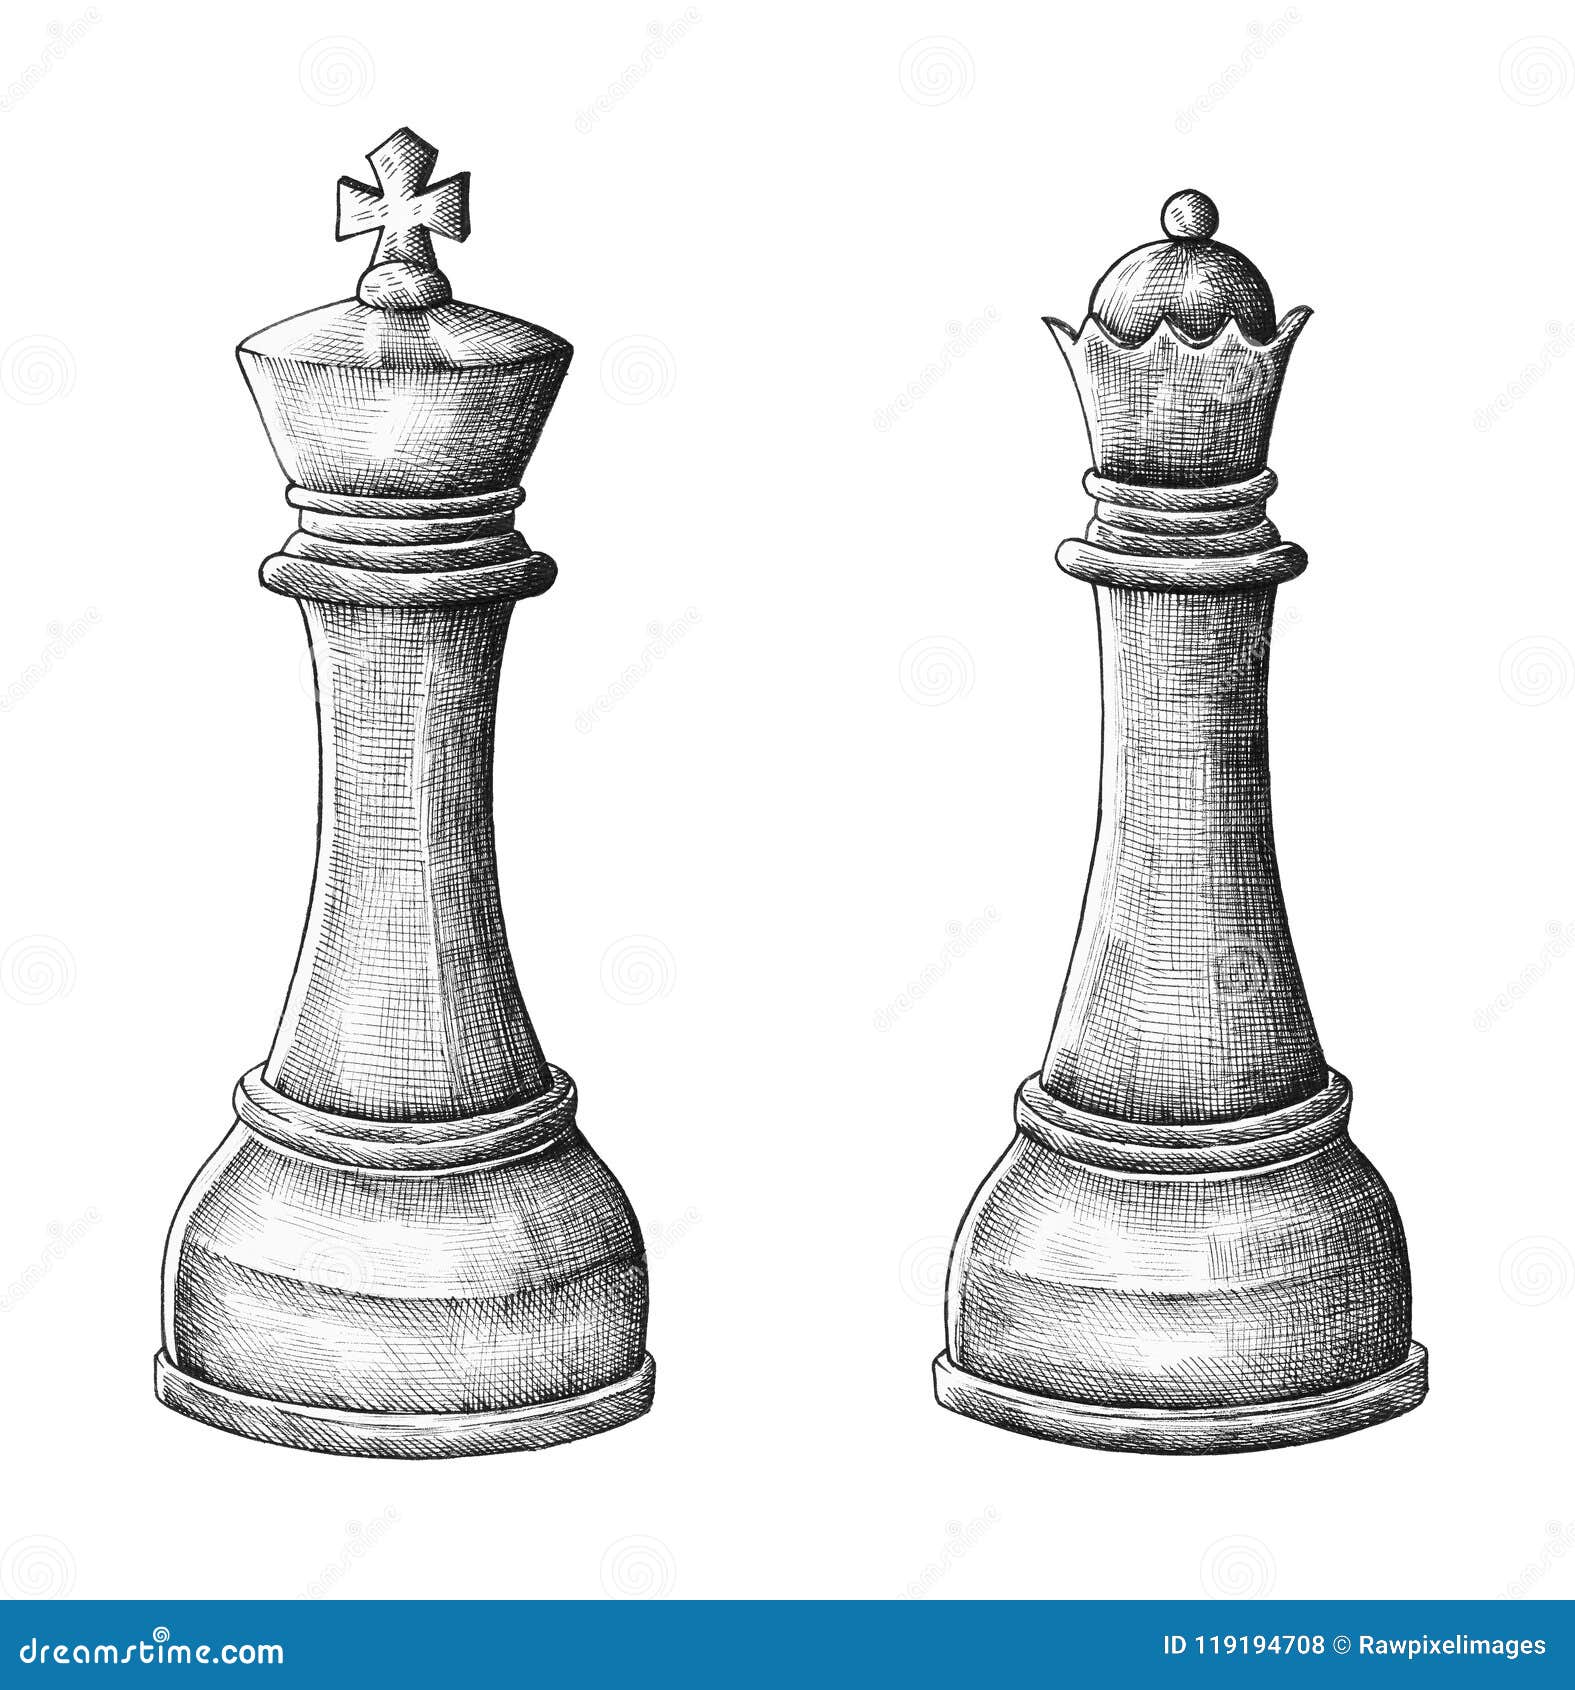 Desenho de xadrez Coroa Livro para colorir Rainha reinante, xadrez